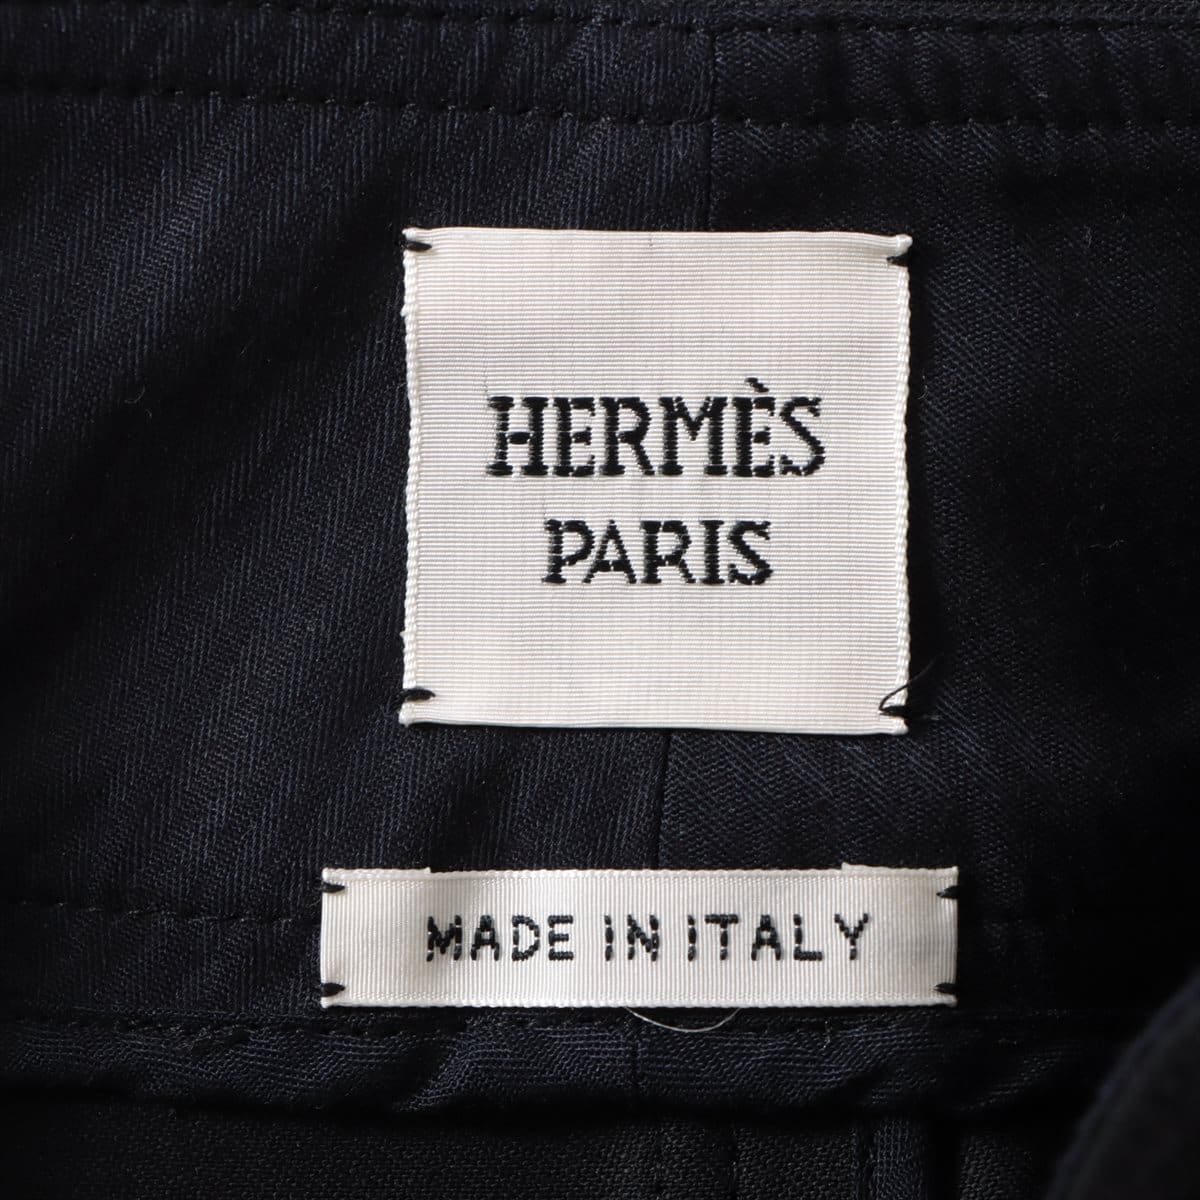 Hermès Chaîne d'Ancre Wool & nylon Skirt 32 Ladies' Black